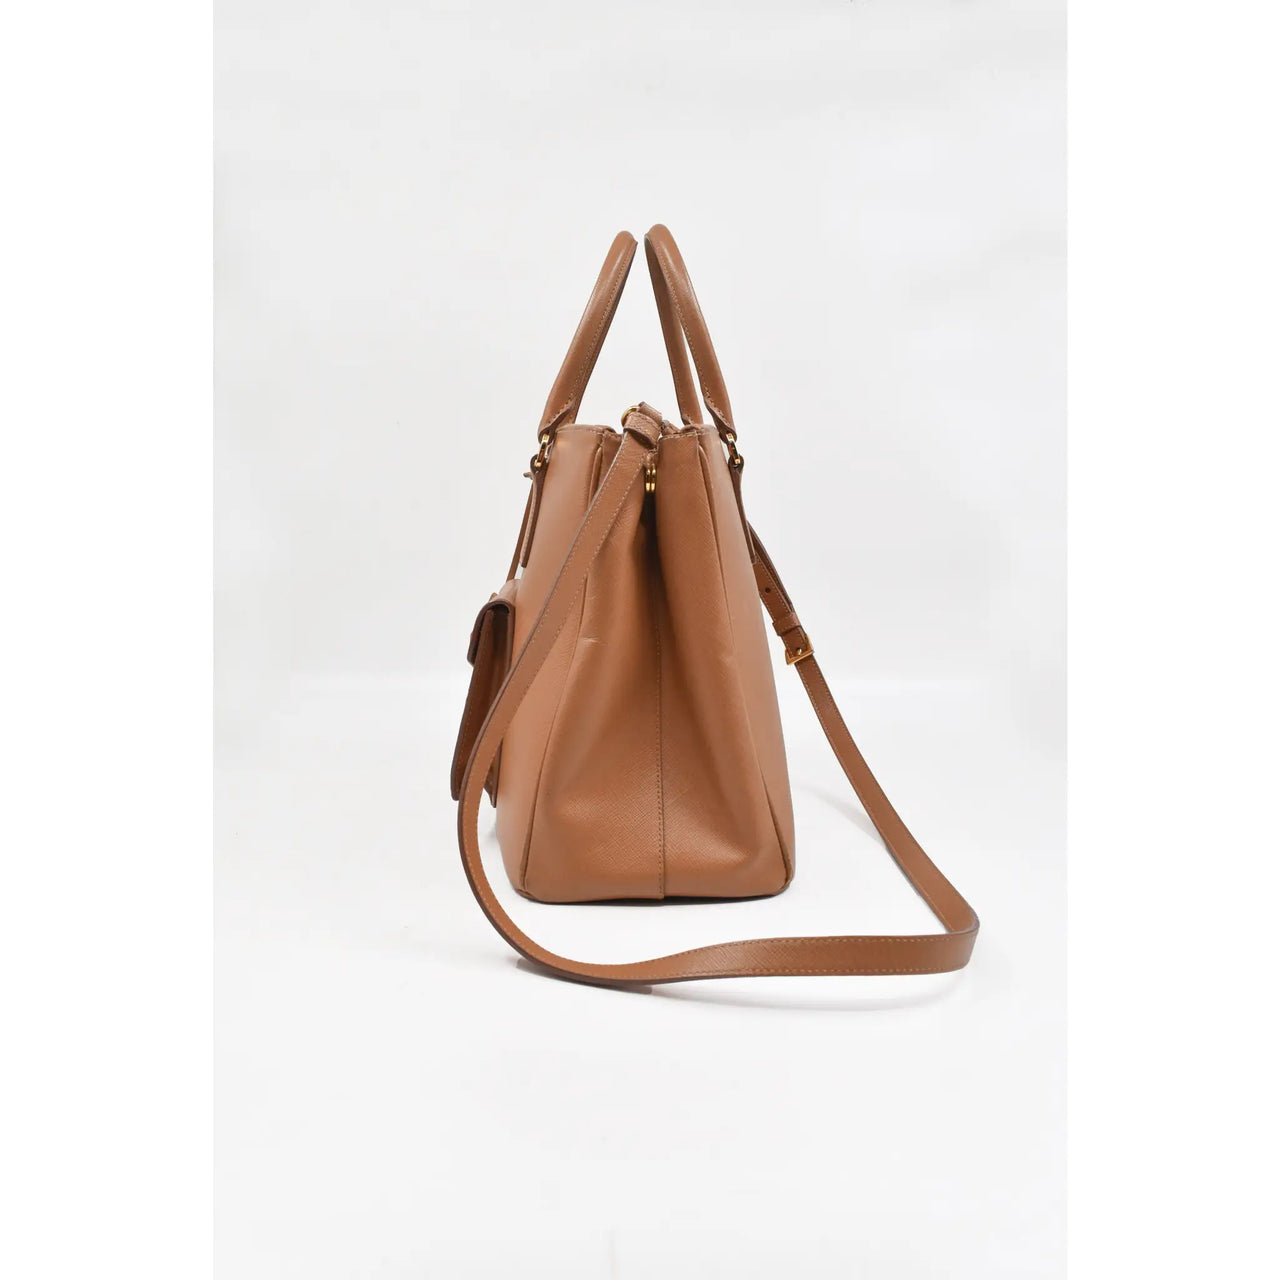 Prada Double Saffiano Leather Tote Bag